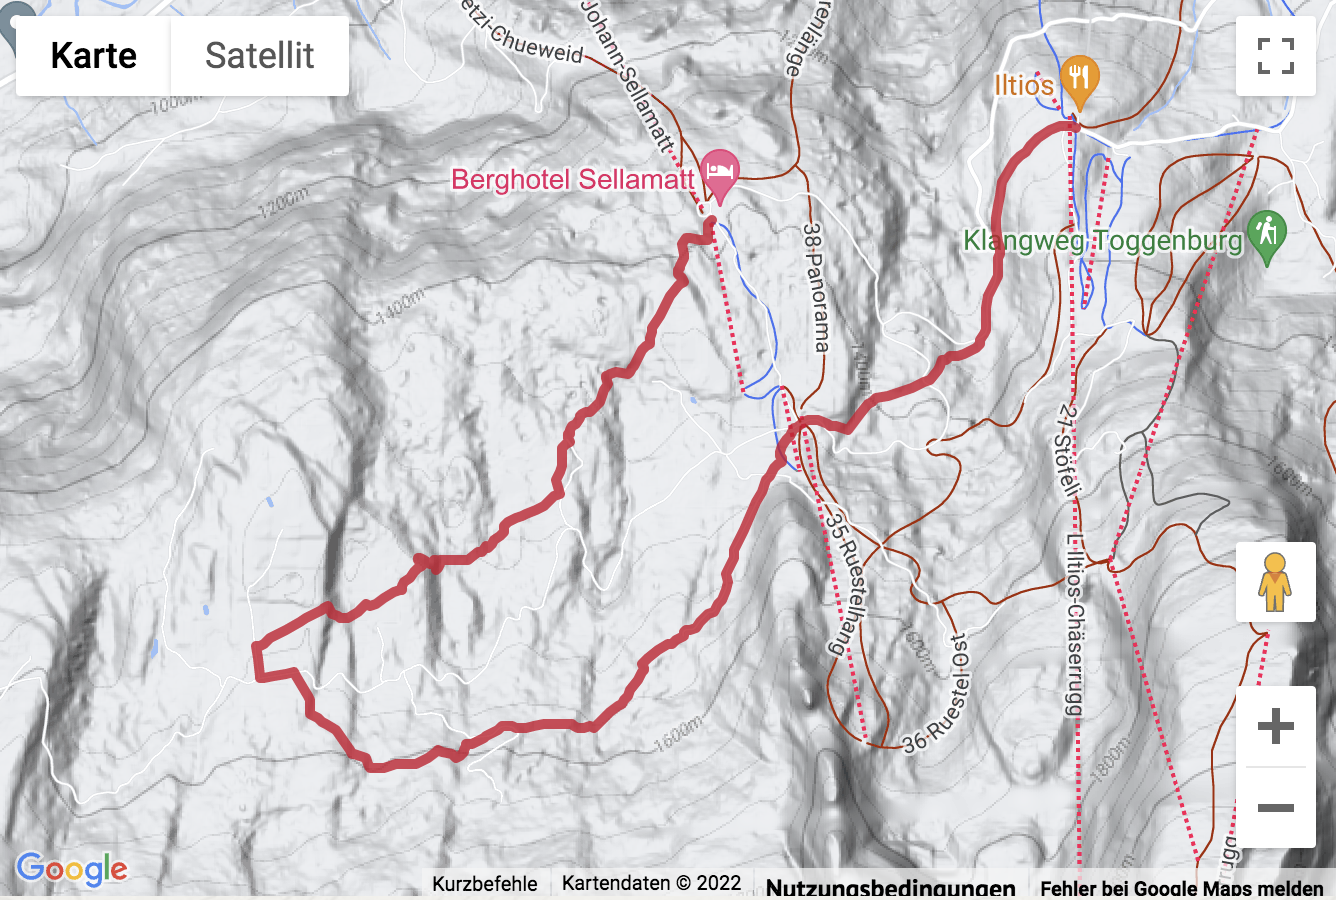 Übersichtskarte Panoramawanderung Alp Sellamatt - Iltios